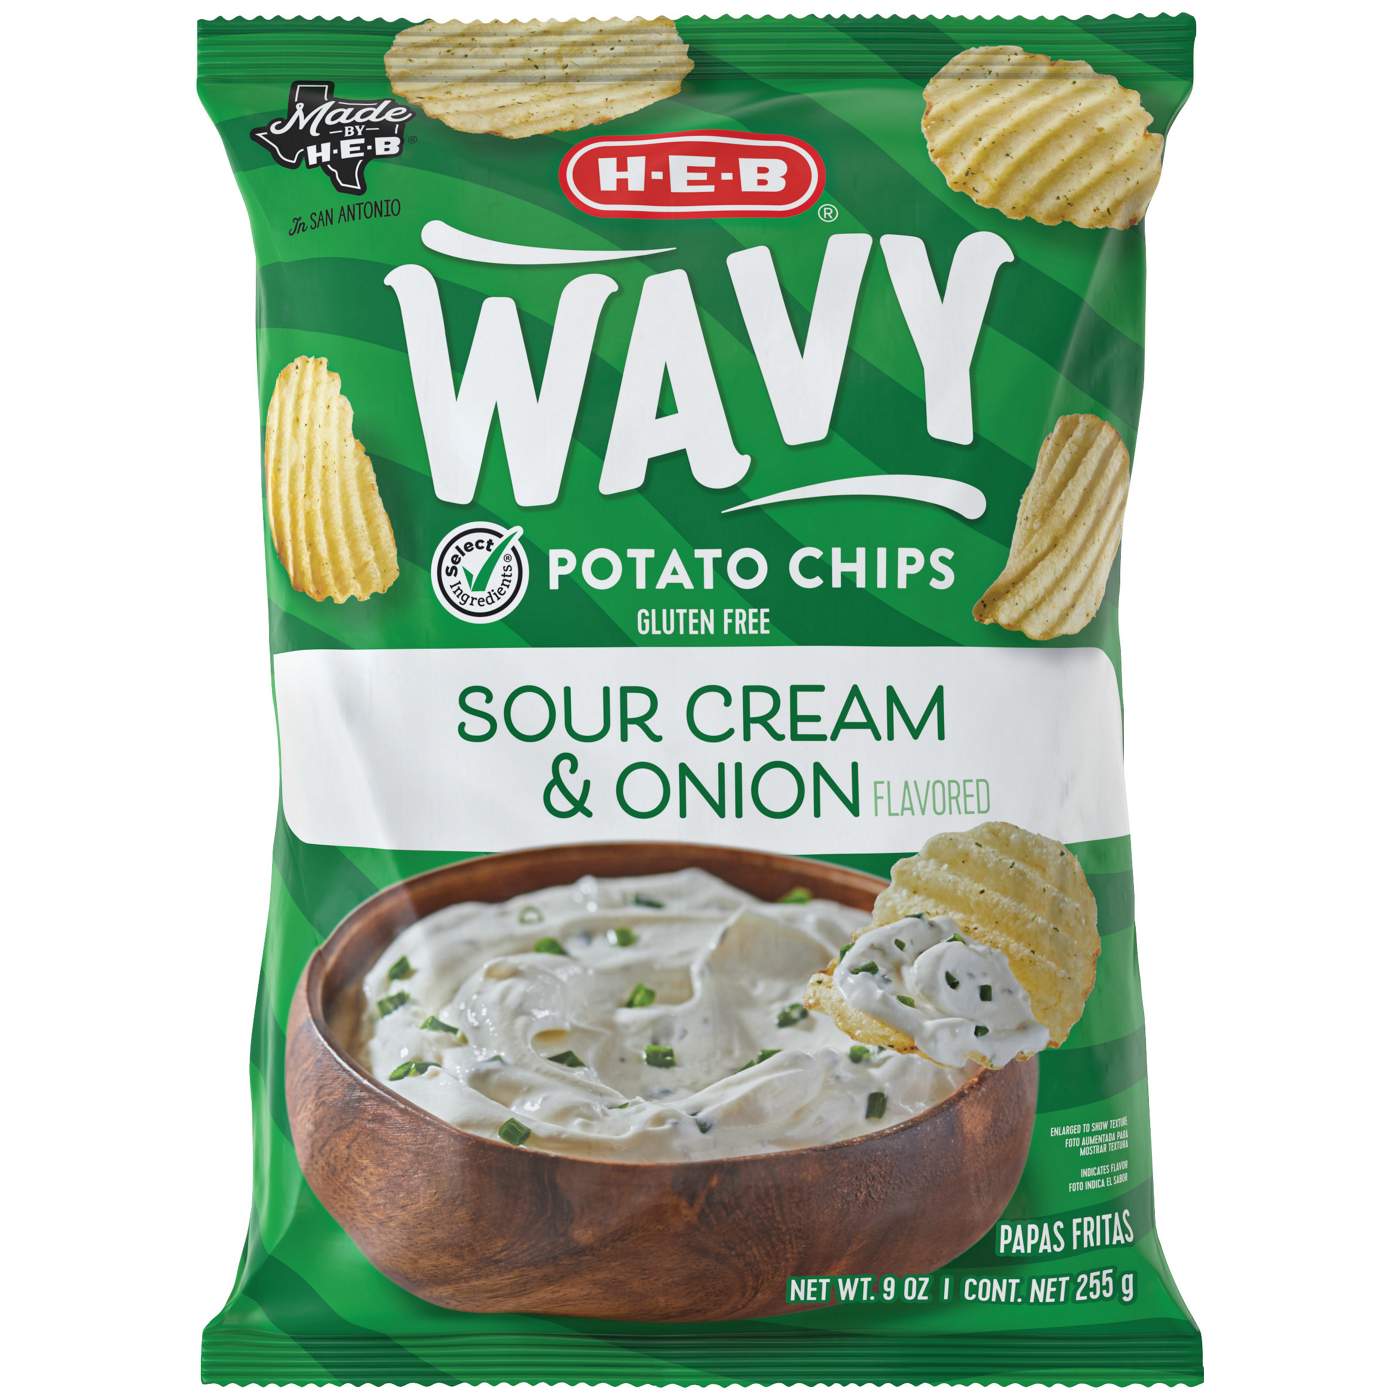 H-E-B Wavy Potato Chips - Sour Cream & Onion; image 1 of 3